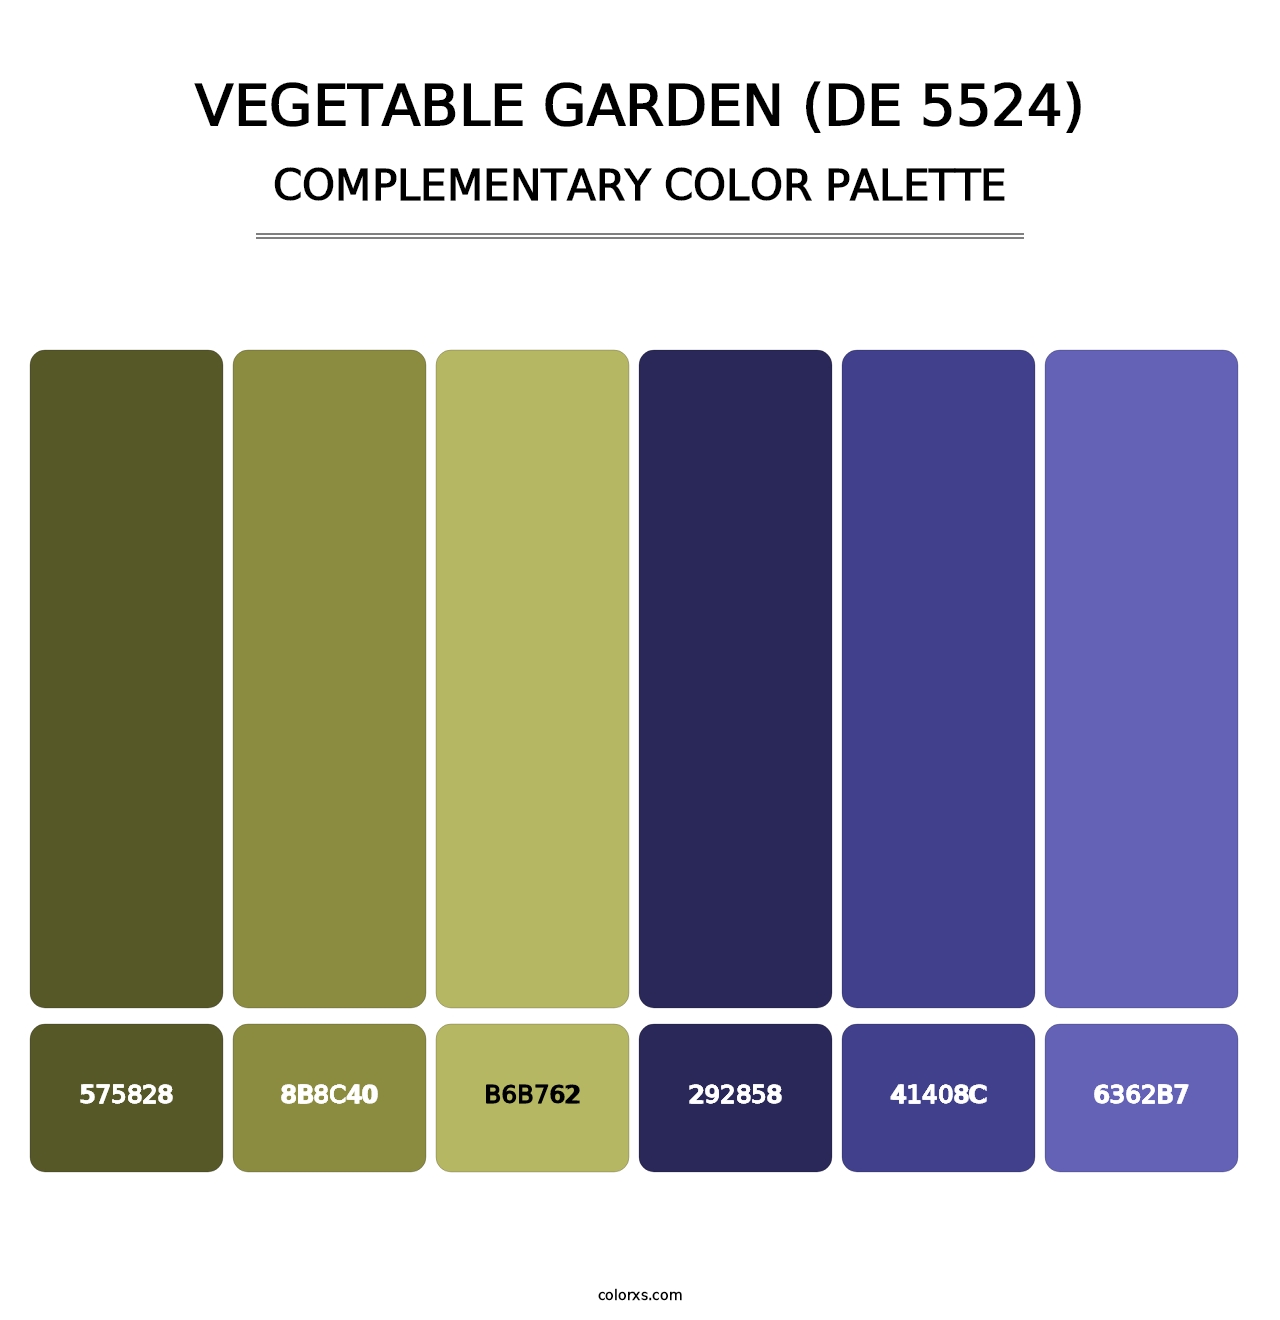 Vegetable Garden (DE 5524) - Complementary Color Palette